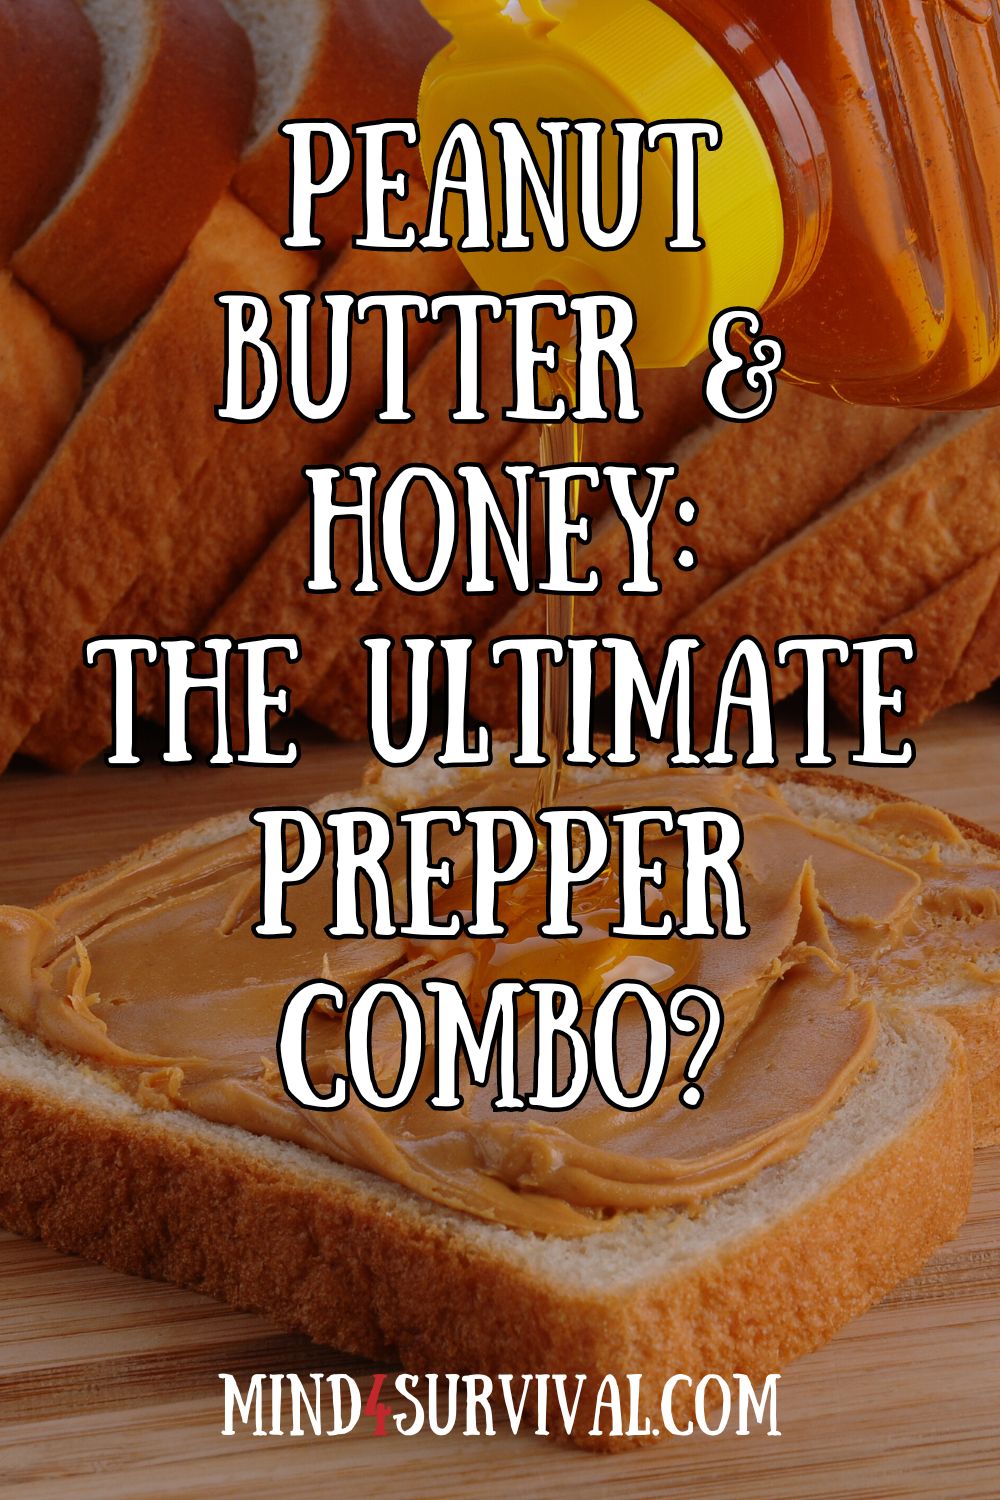 Peanut Butter & Honey Sandwiches - The Ultimate Prepper Combo?